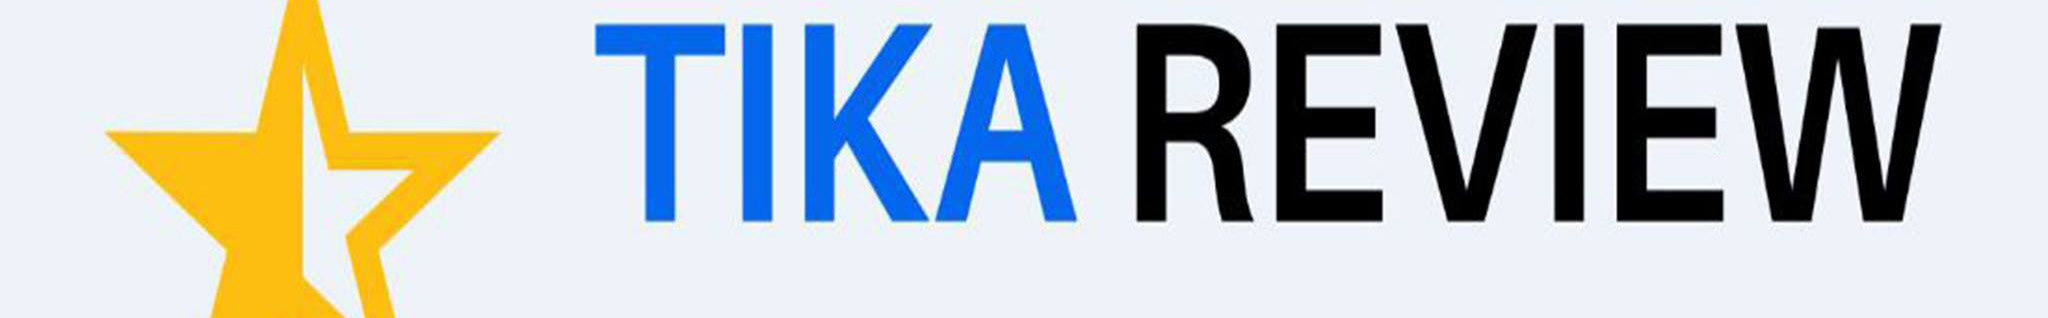 Tika Review's profile banner